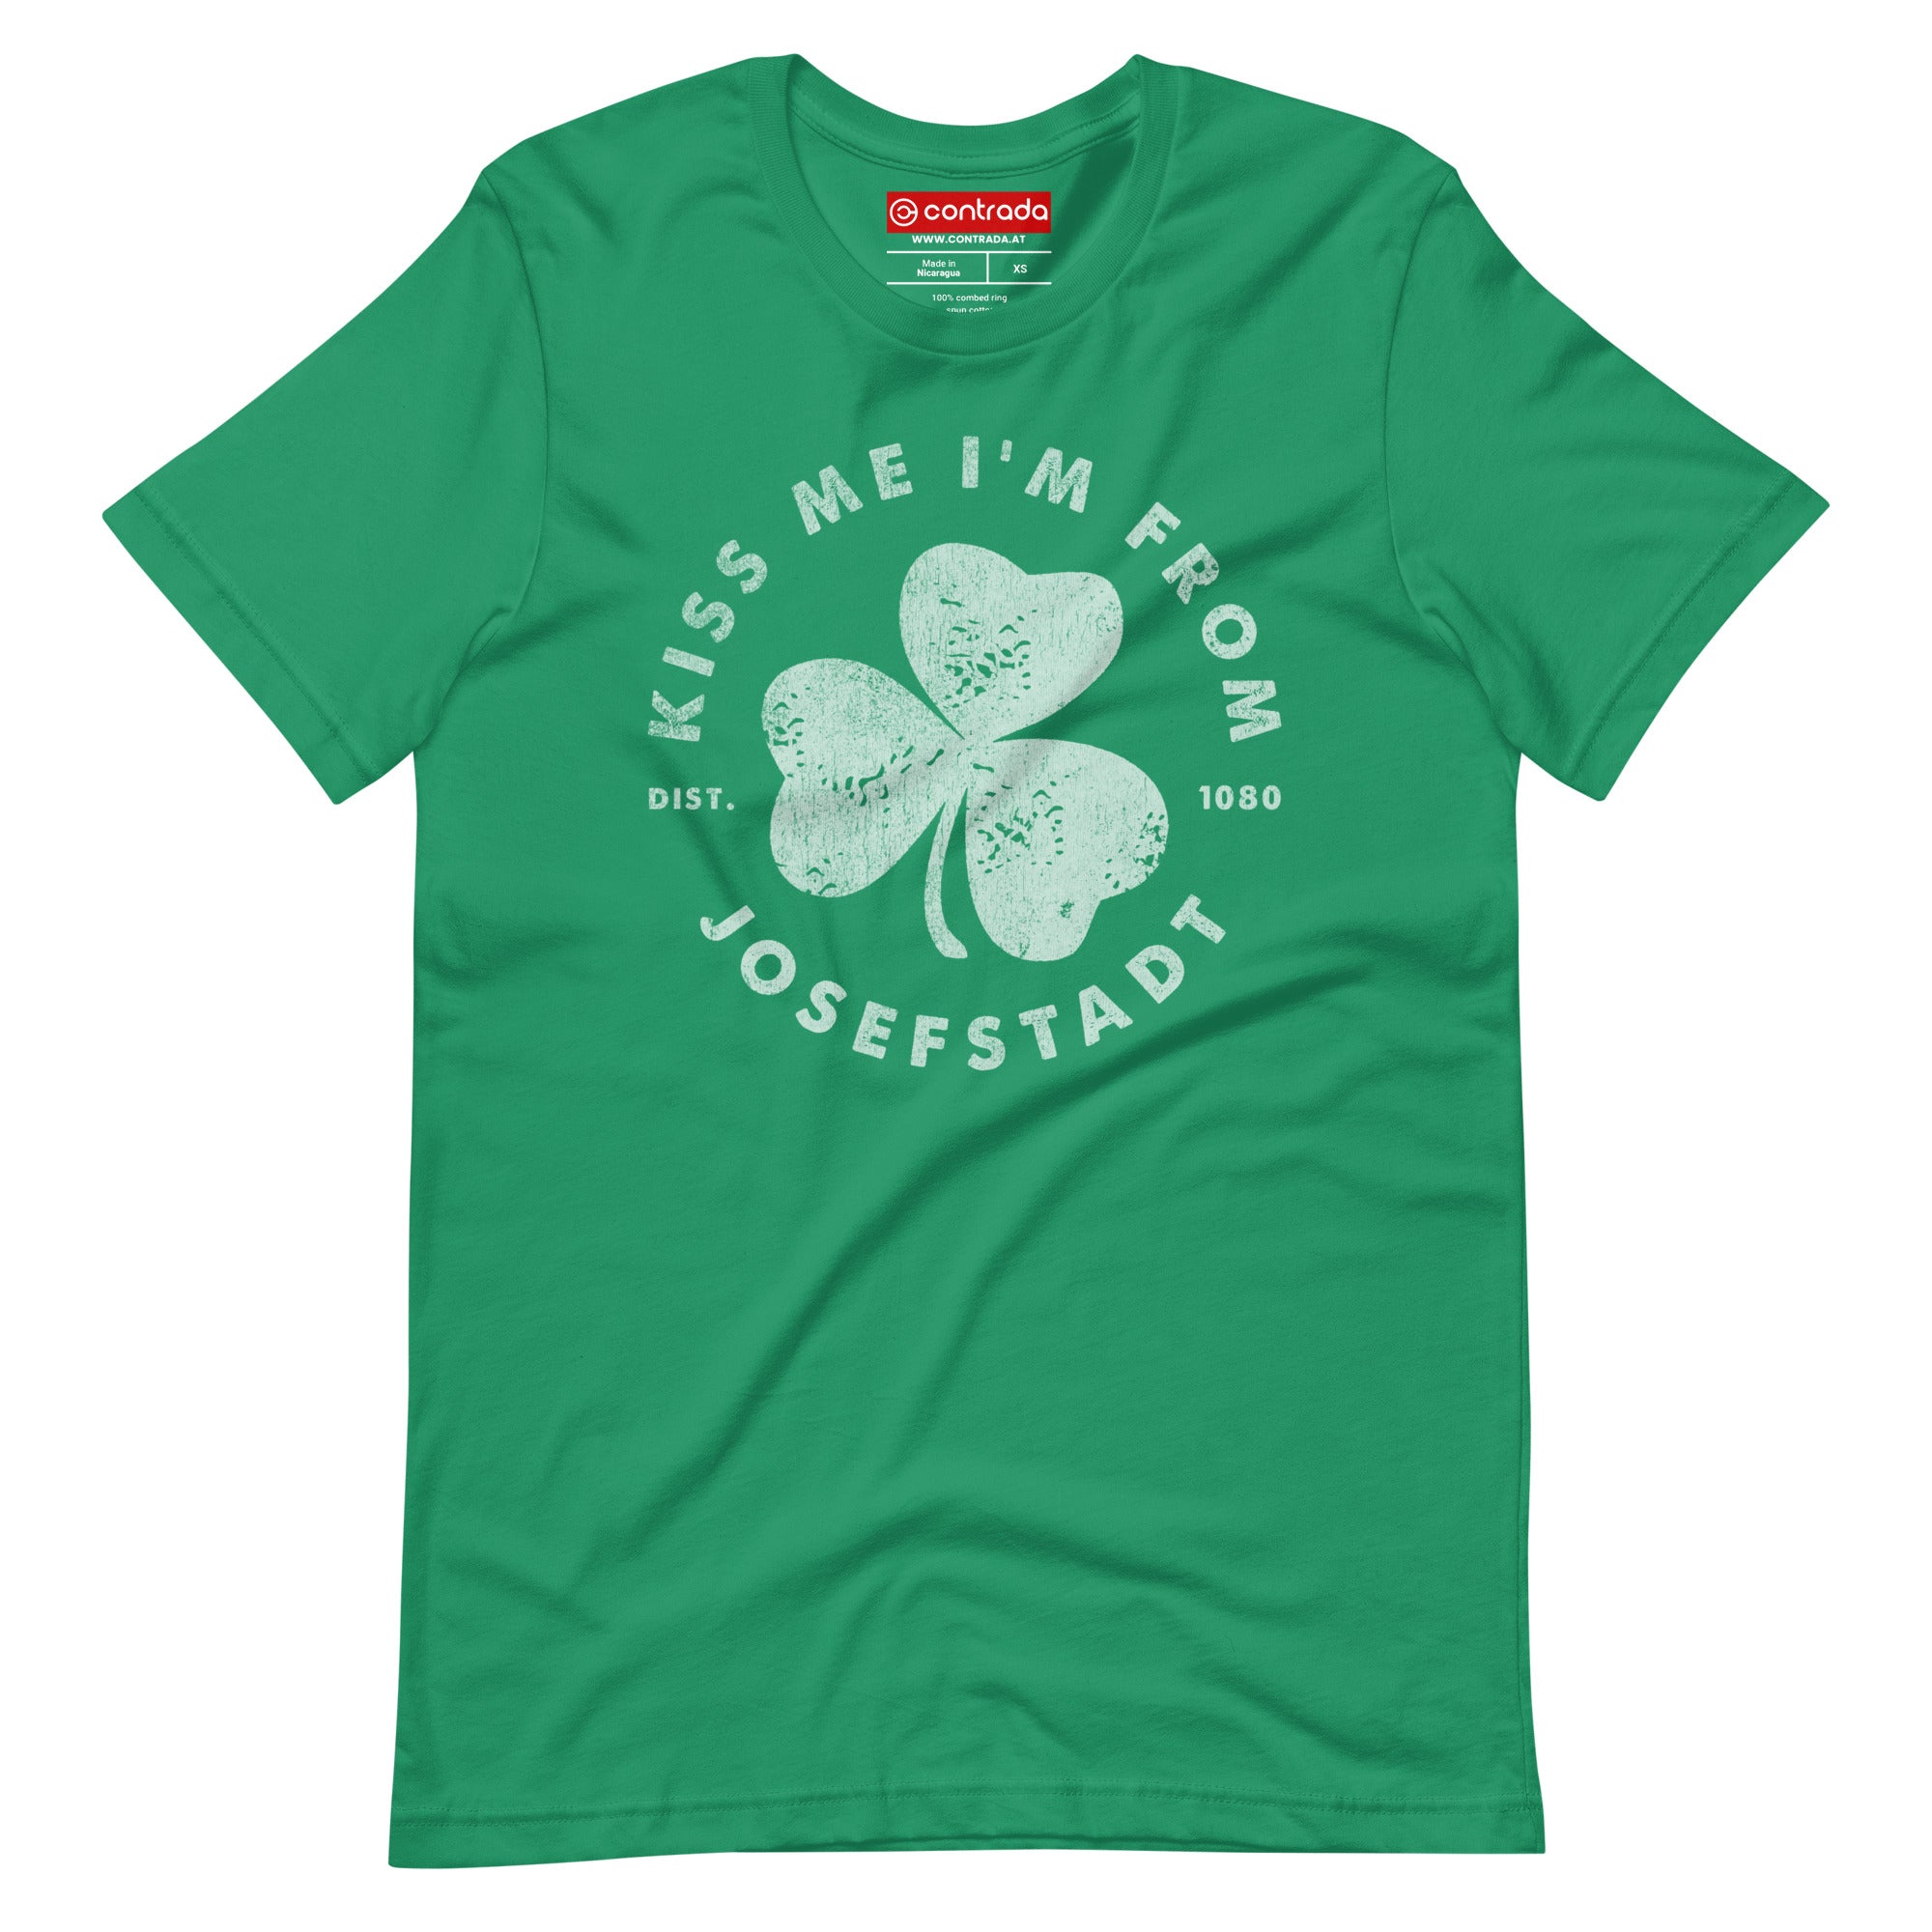 08., Josef Stadt, Wien, „St. Patrick's Day“, Modern Basic T-Shirt